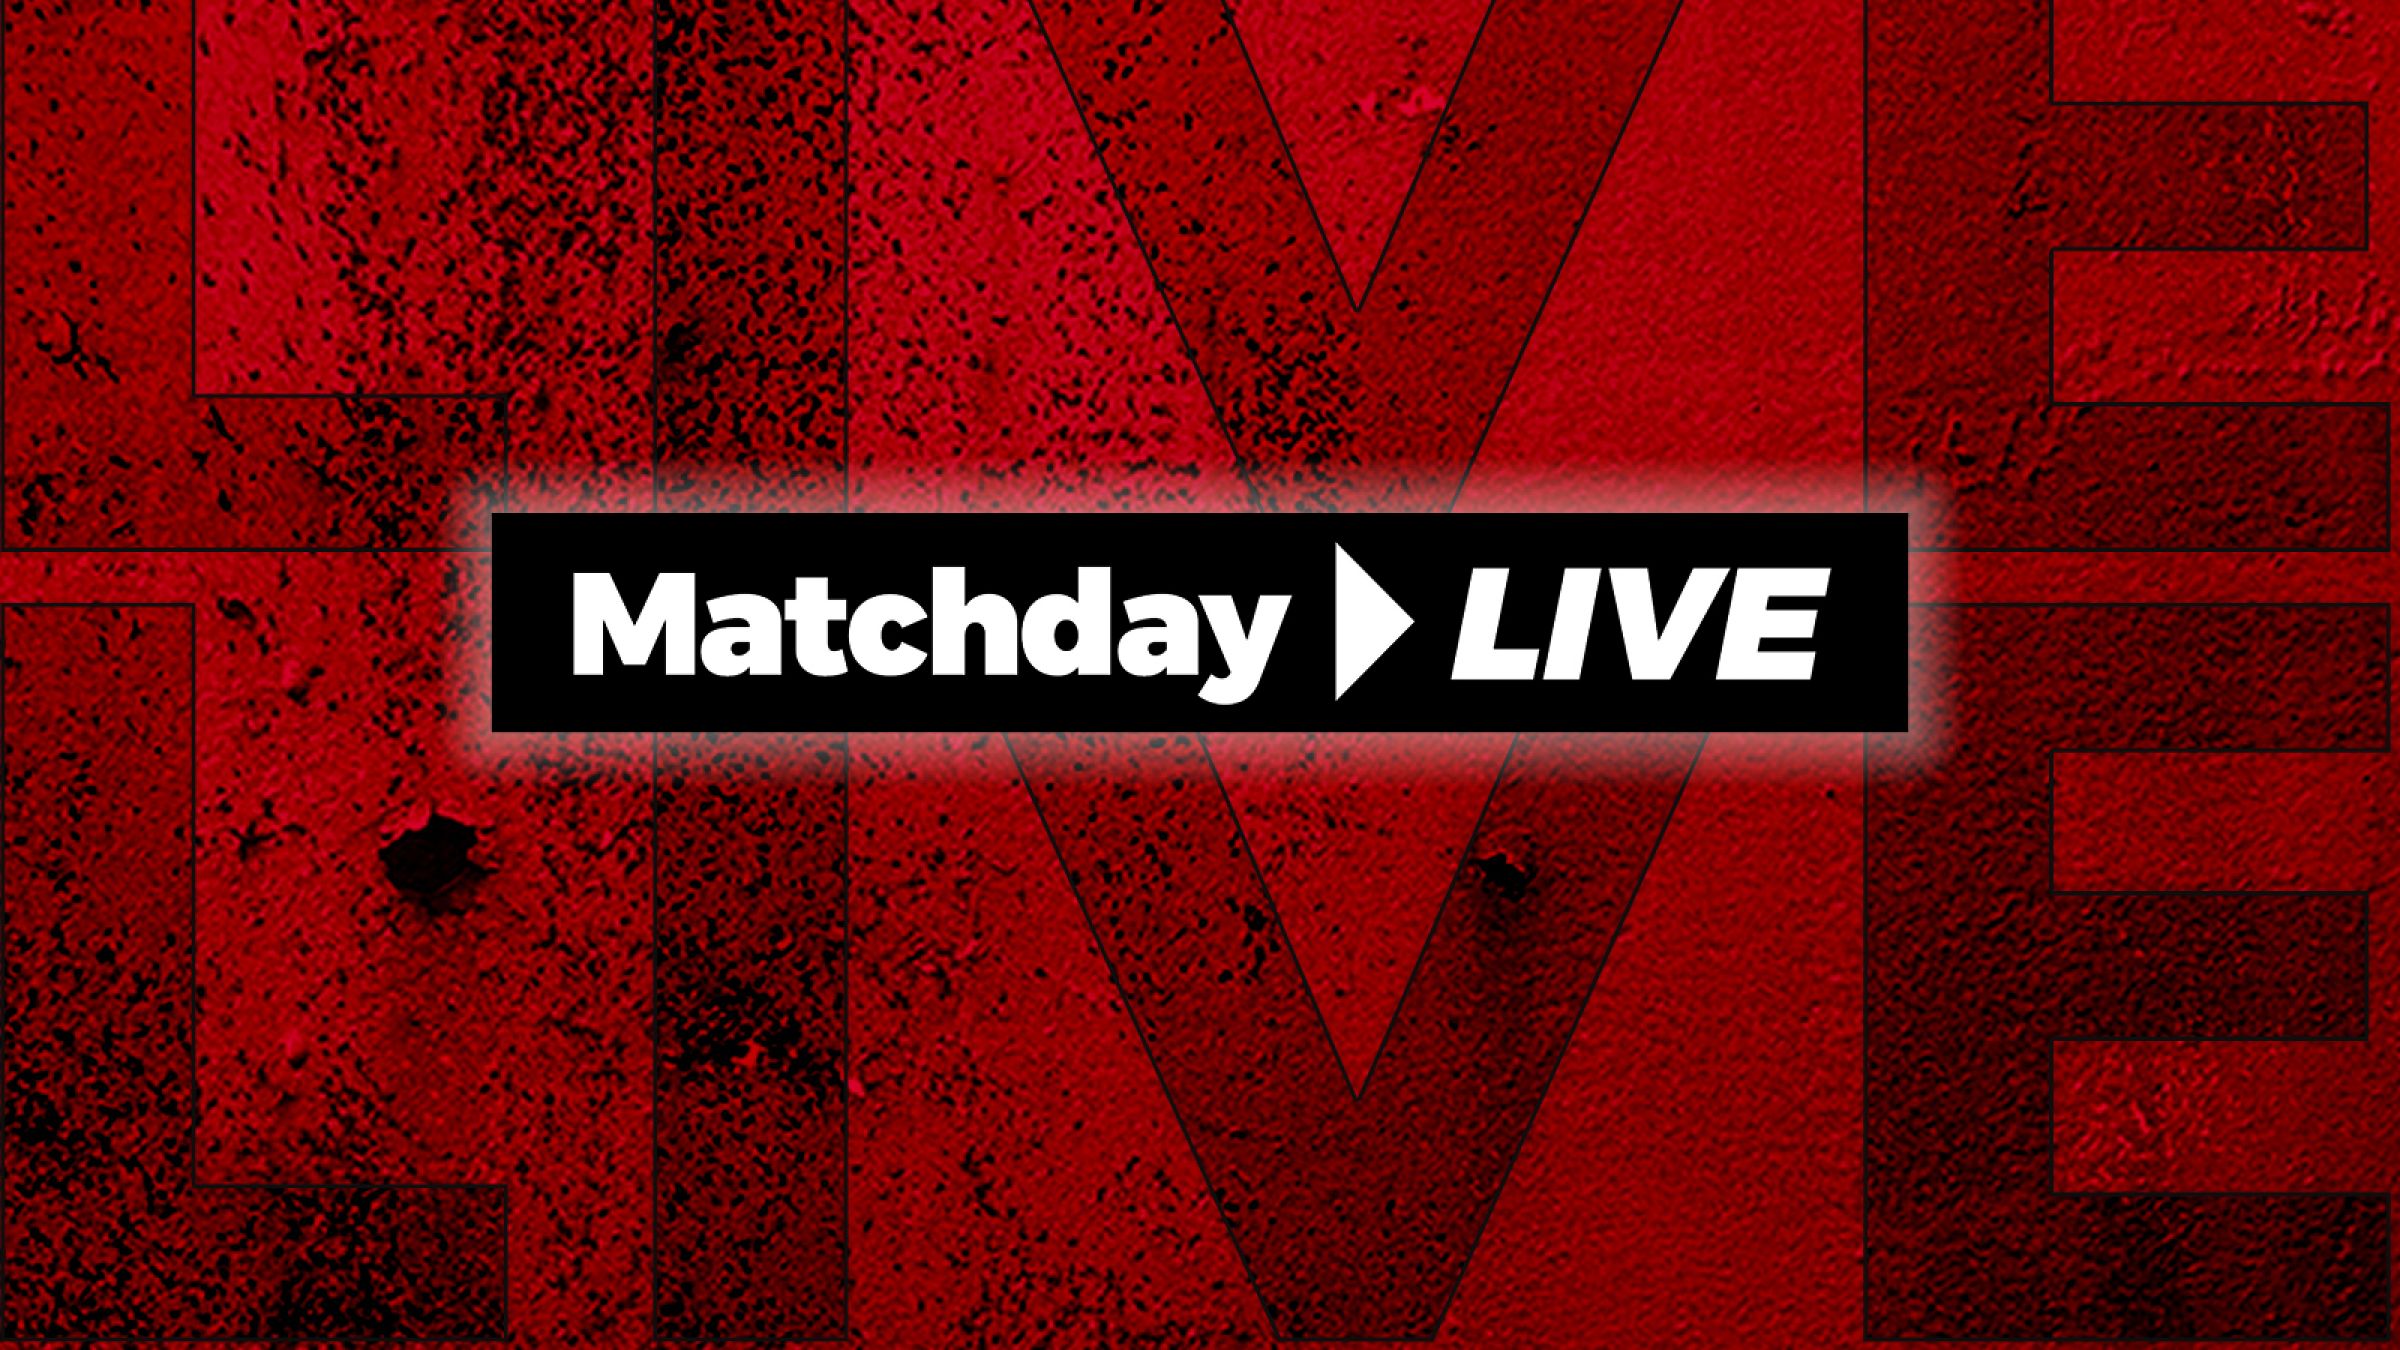 MatchdayLive Web Image.jpg